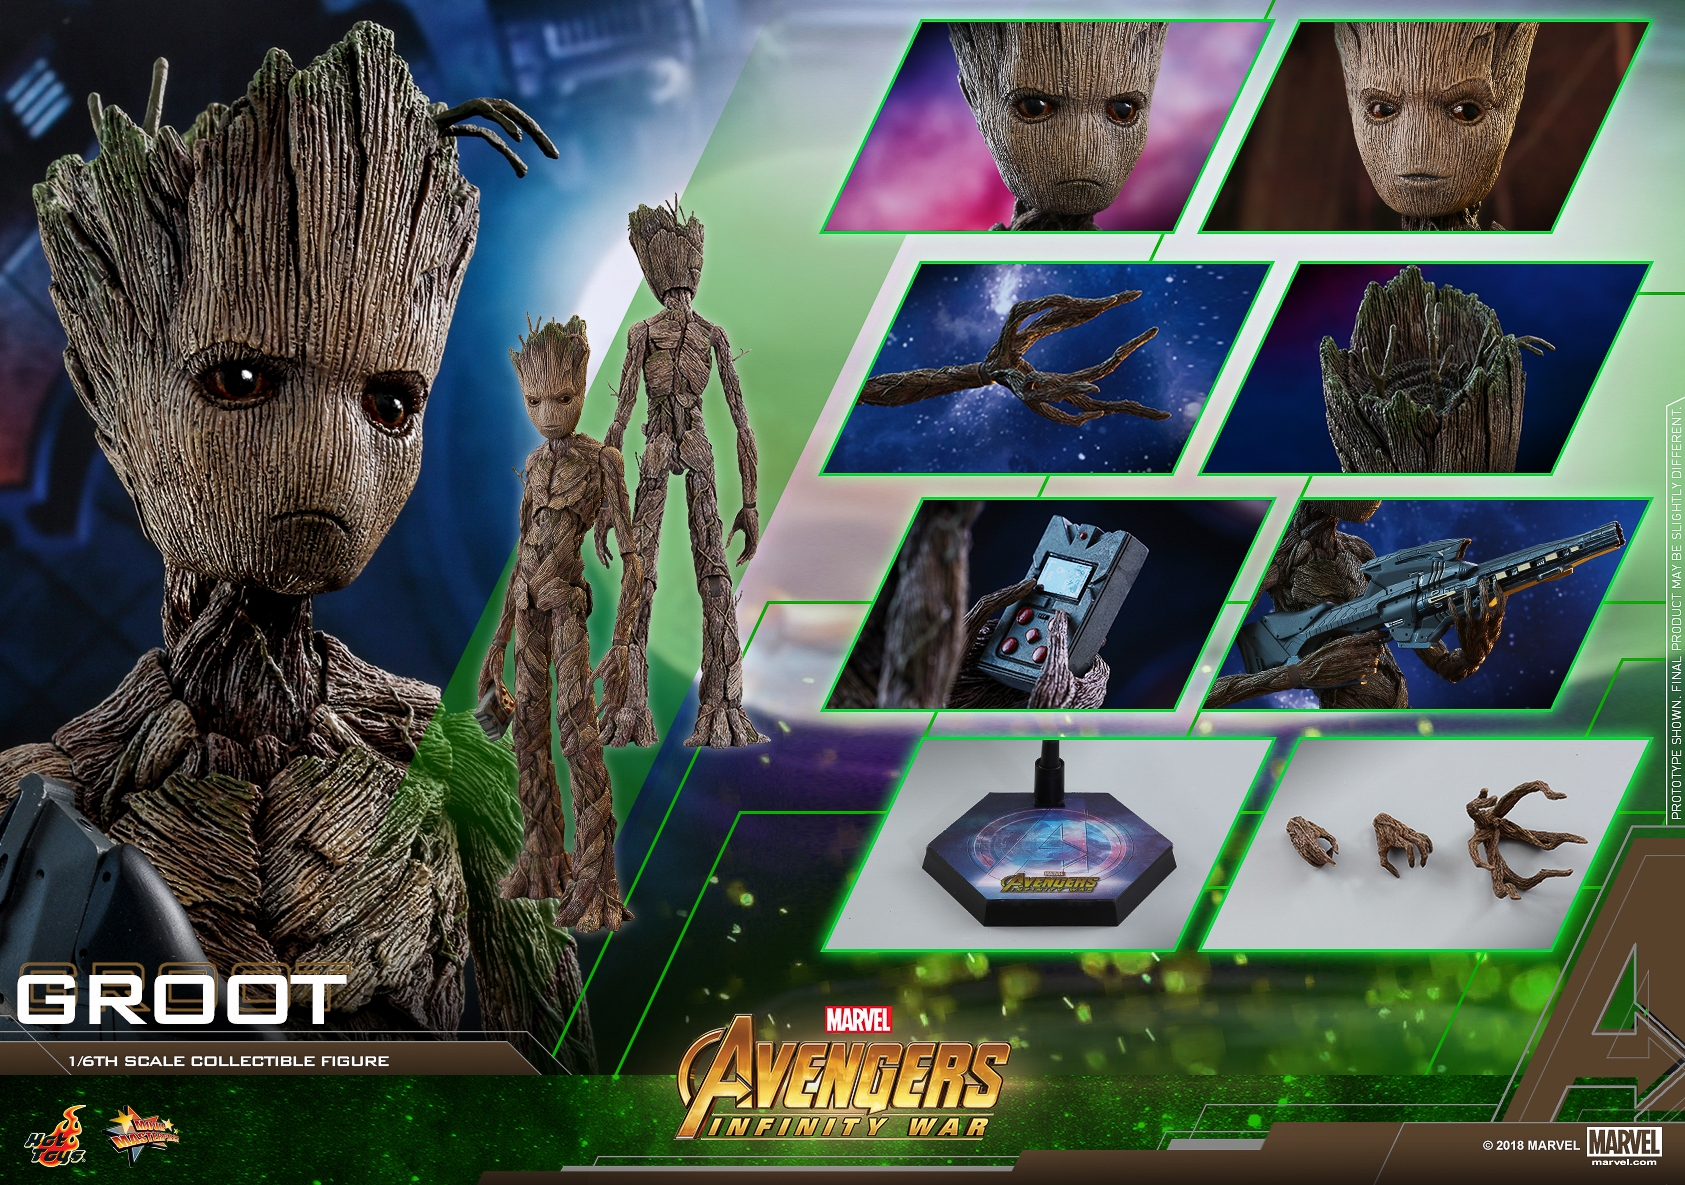 Hot-Toys-MMS475-Avengers-Infinit-War-Groot-Collectible-Figure-017.jpg